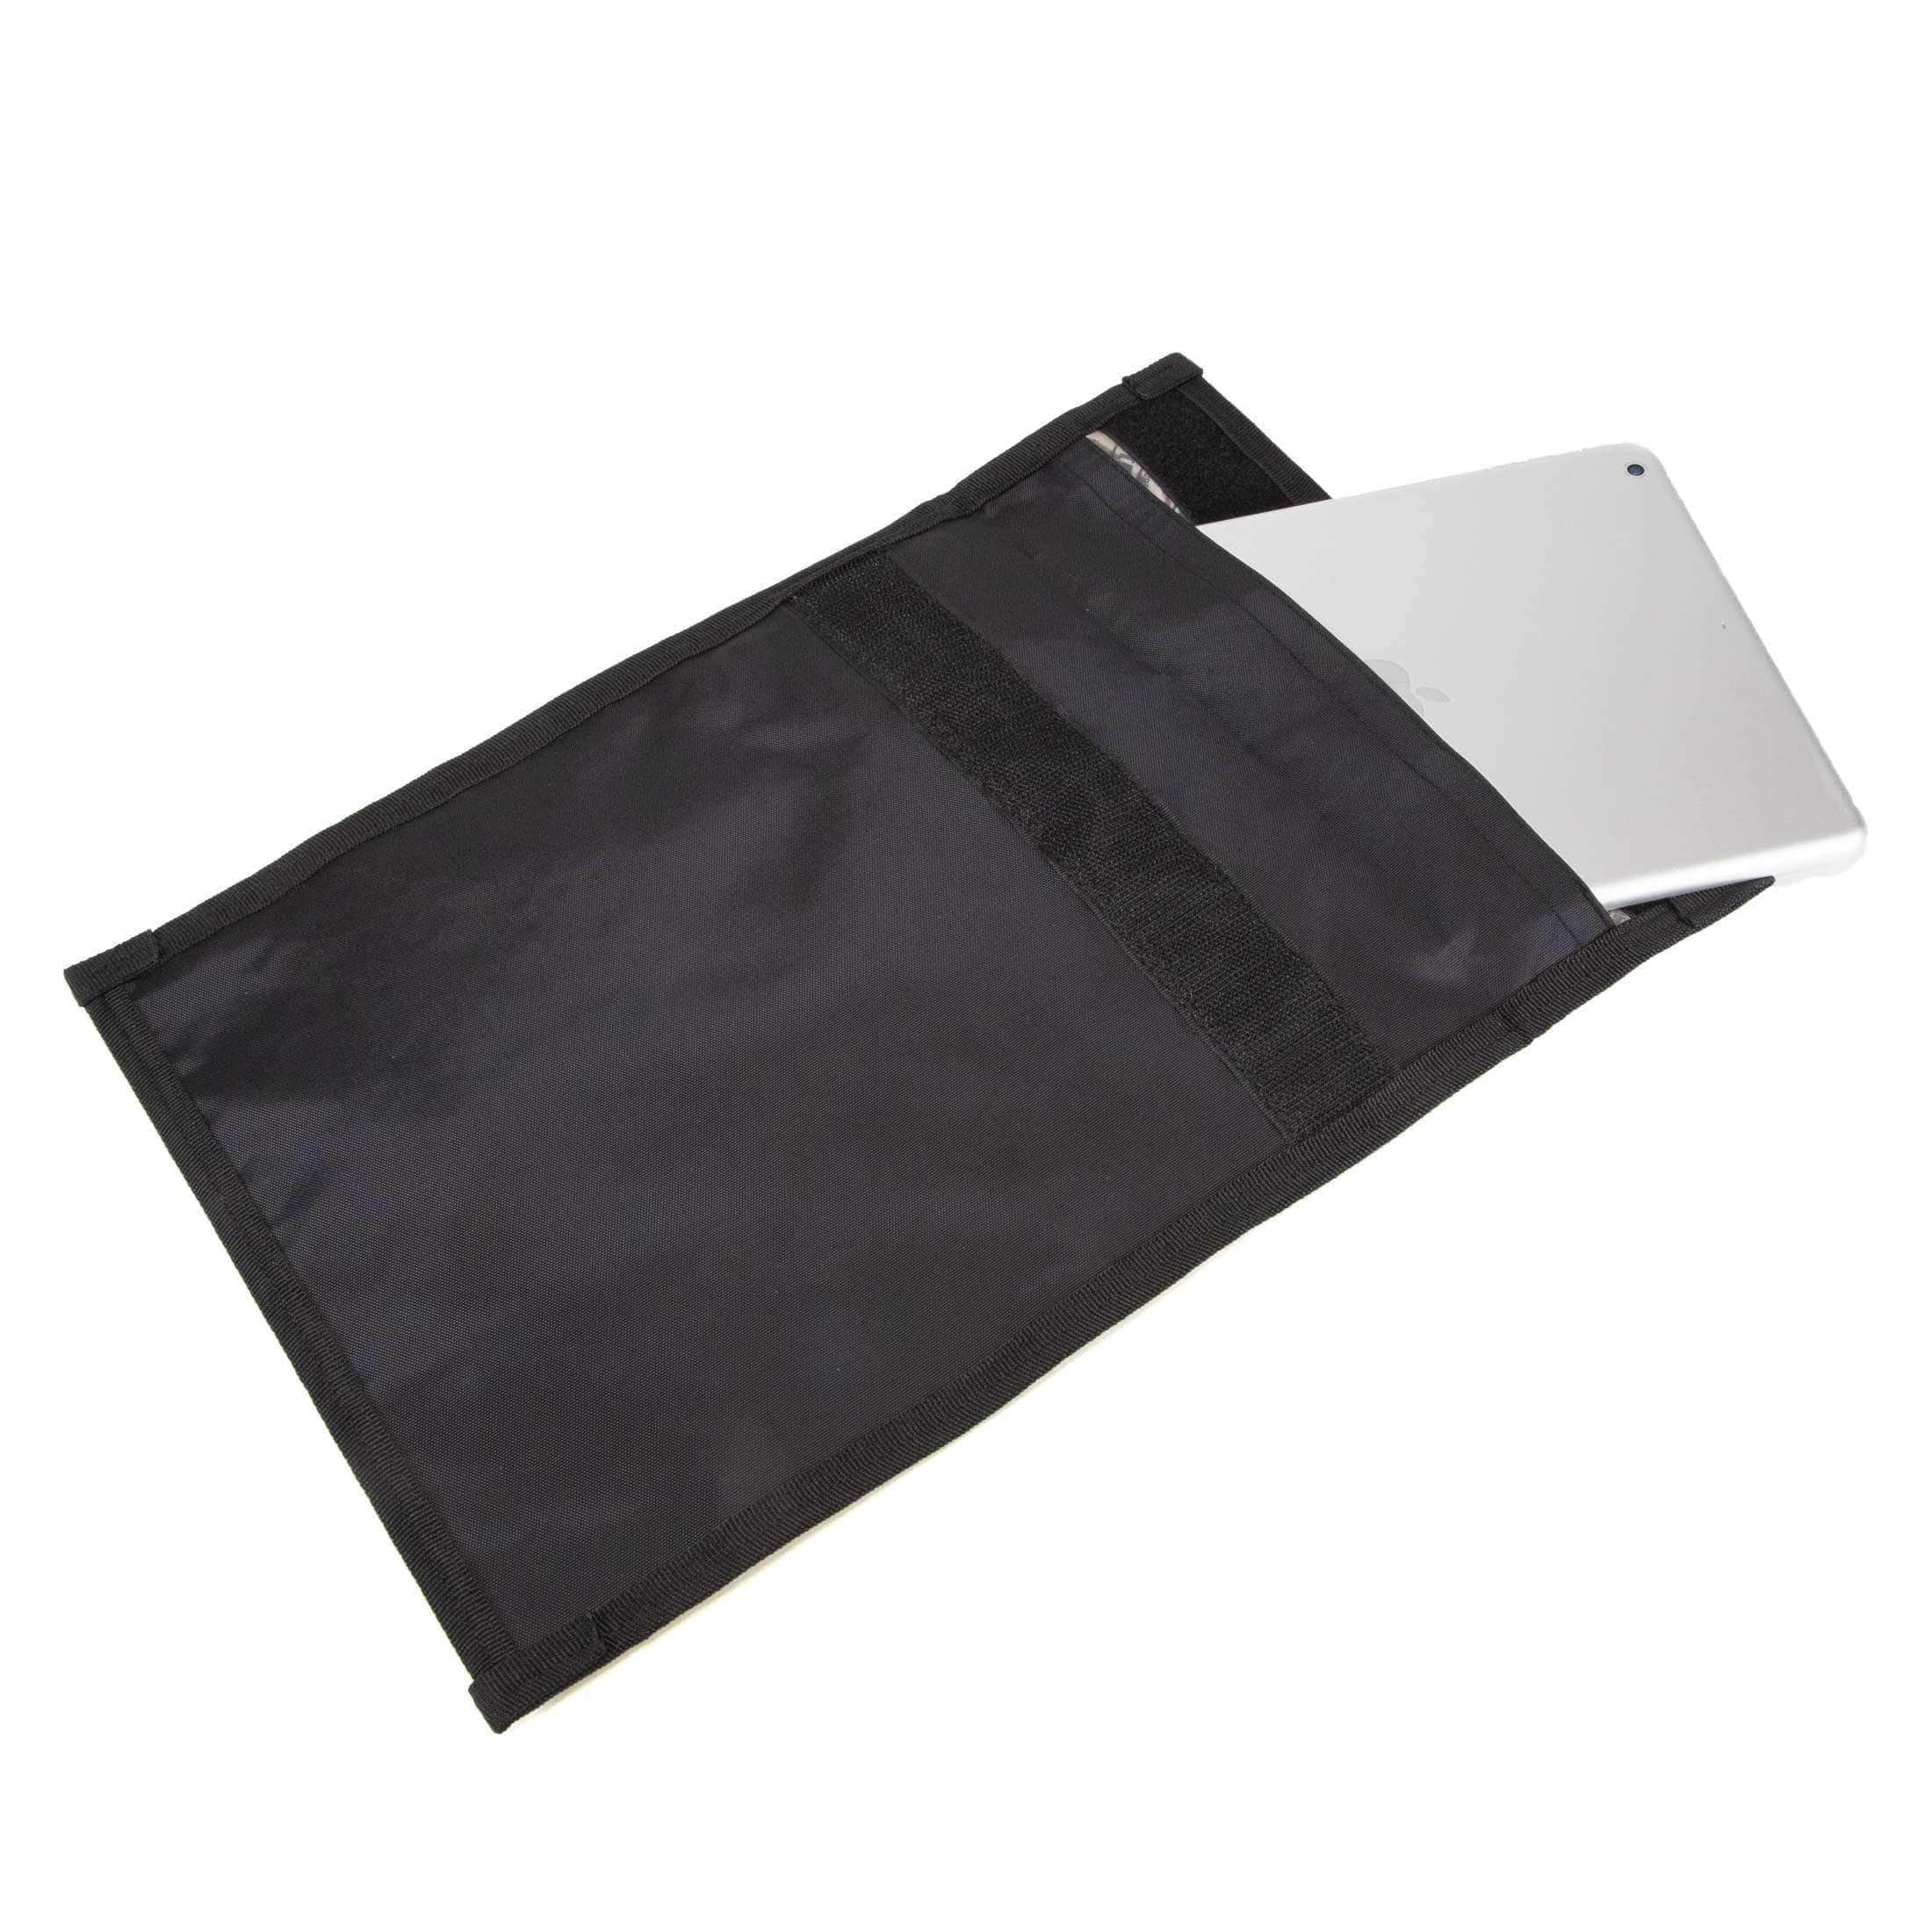 ID Stronghold Shielded Bag Laptop Tablet Stronghold Bag 10"x12.5"